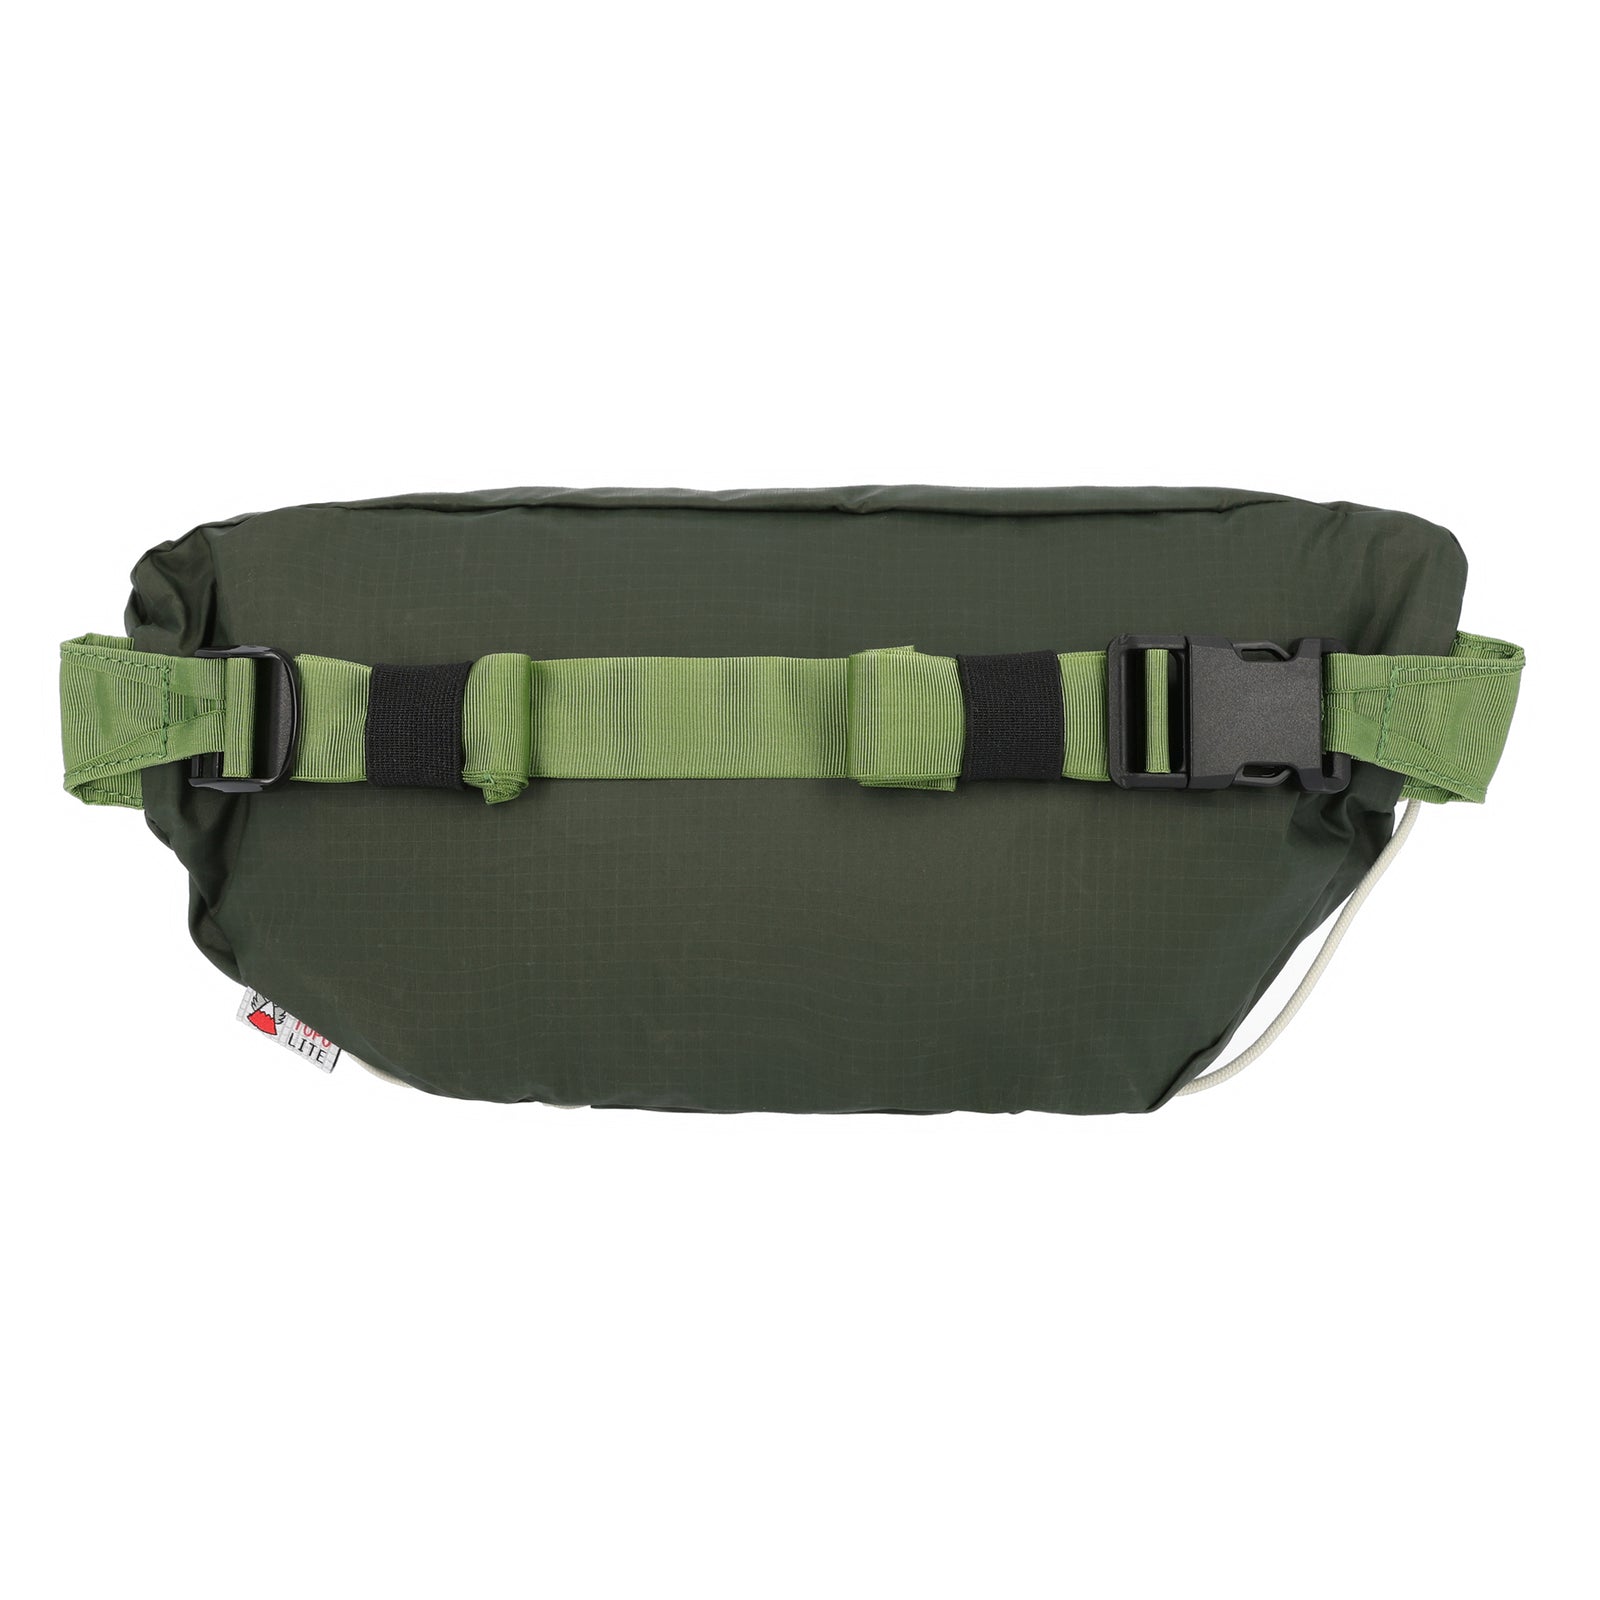 Back and waist belt on Topo Designs TopoLite Hip Pack Ultralight fanny pack crossbody bum bag in "olive" green.